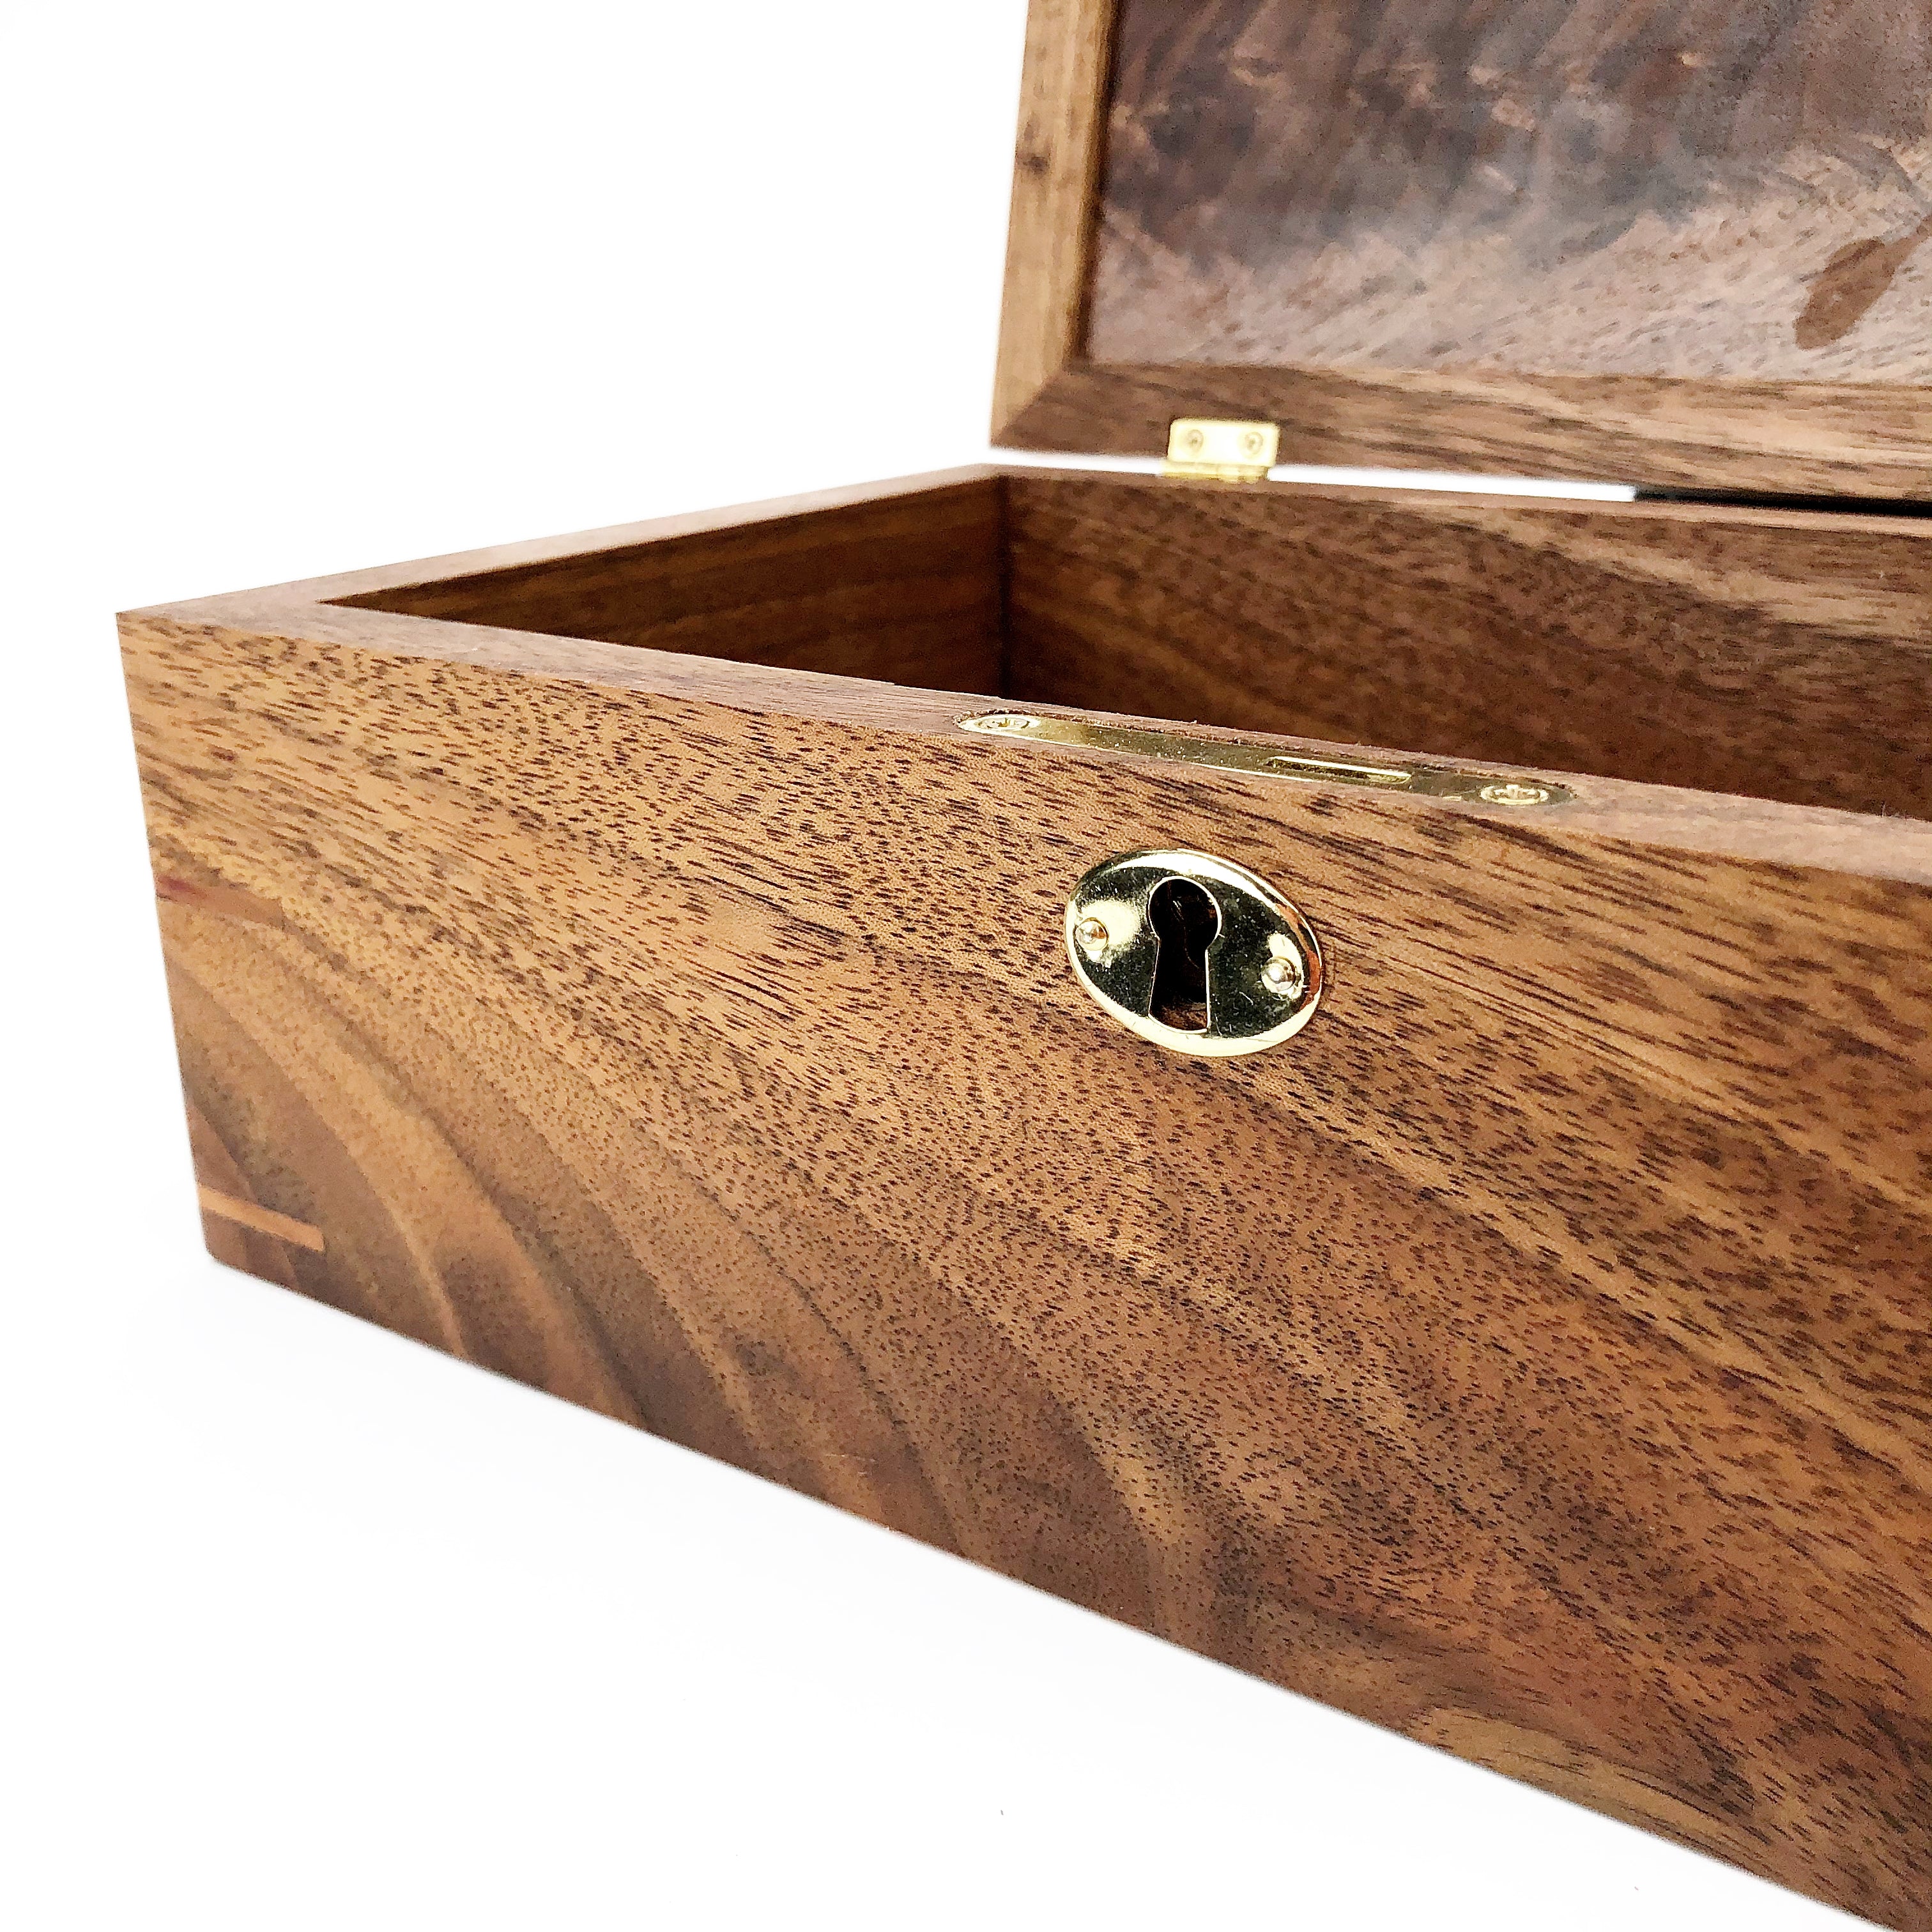 The Original Box: Jewelry/Valuables Box - Global Sawdust